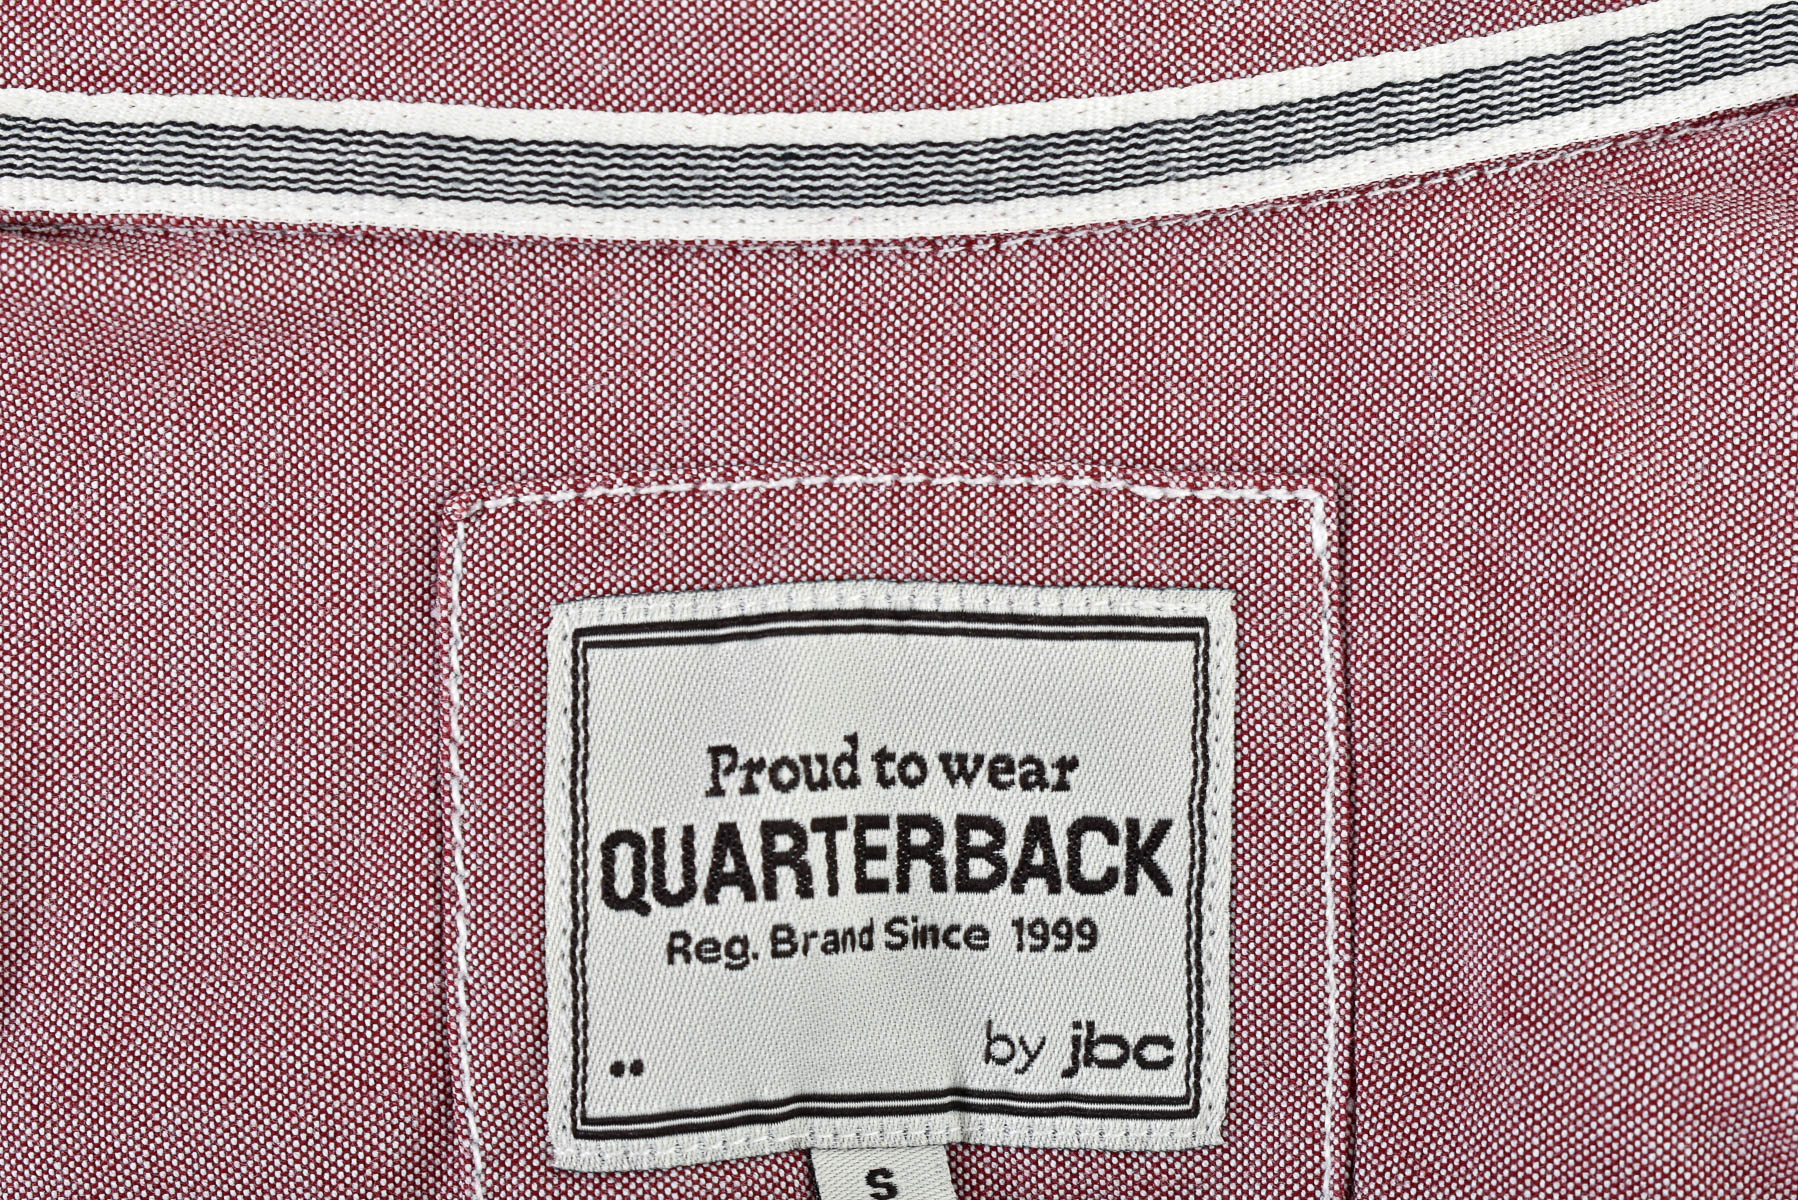 Men's shirt - QUARTERBACK by jbc - 2